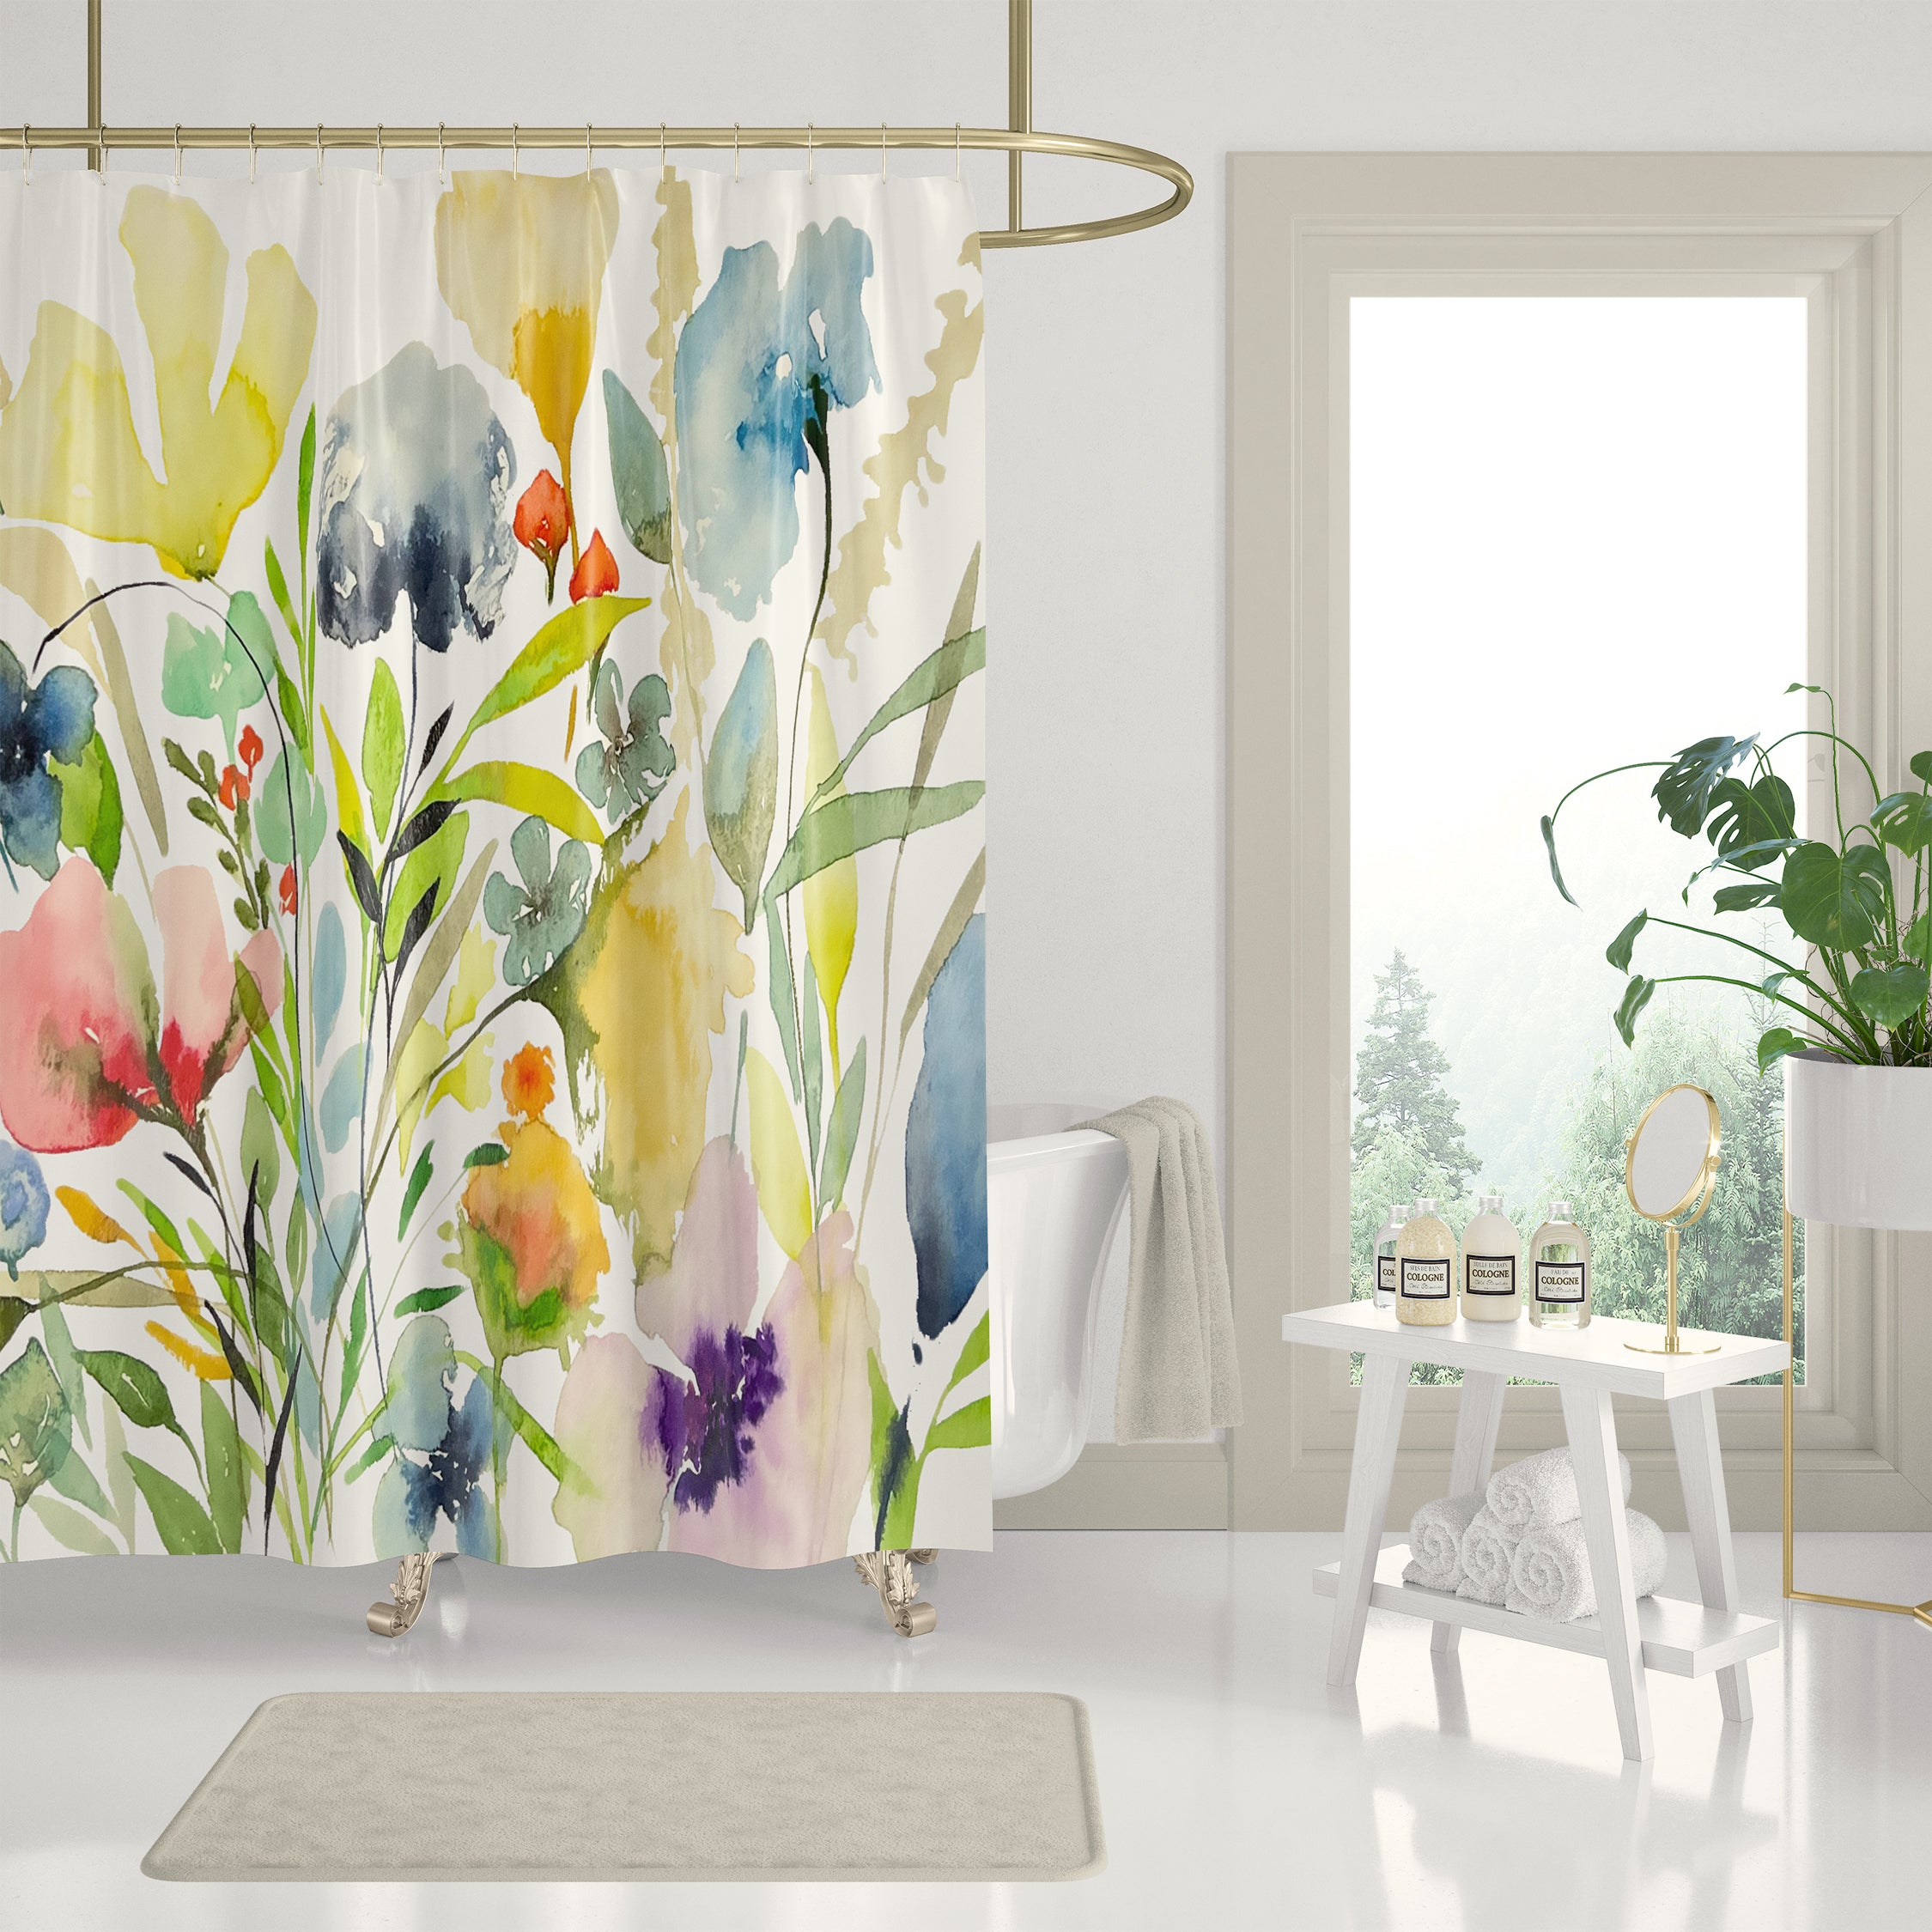 4 Pieces Luxury Perfume Bottle Flower Printed Shower Curtain Decor